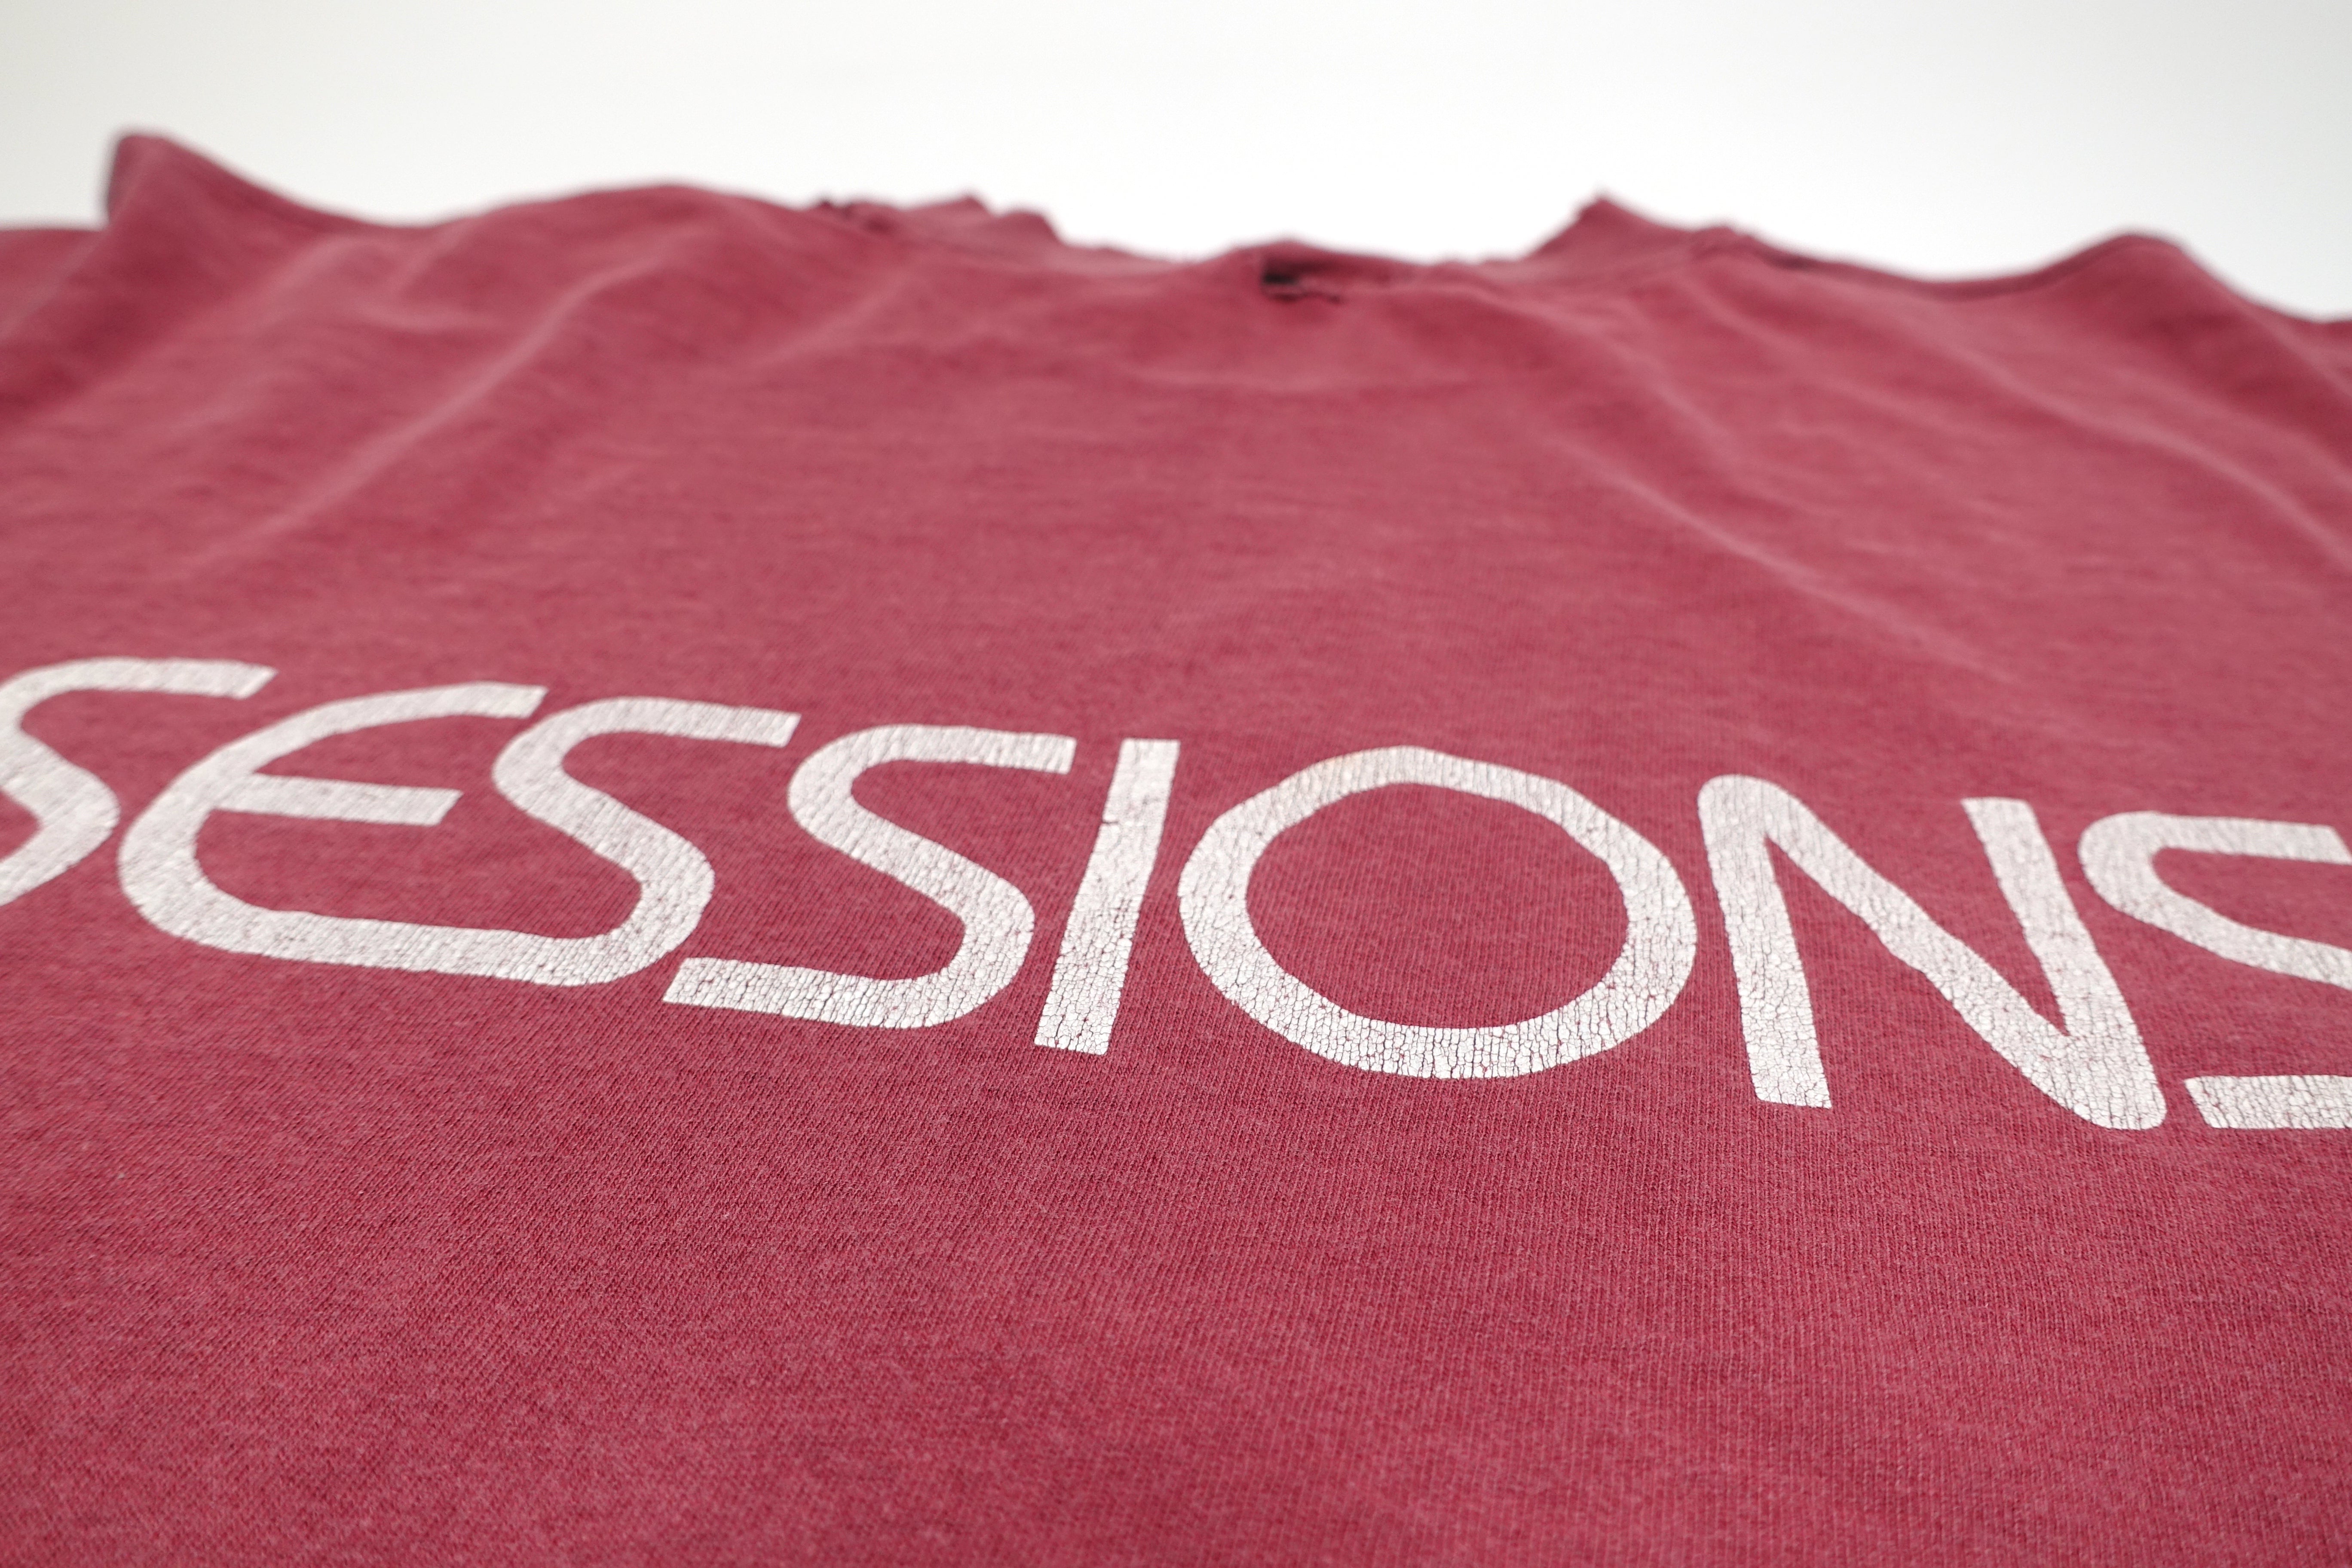 Sessions Skateboard - Star Logo Shirt Size XL